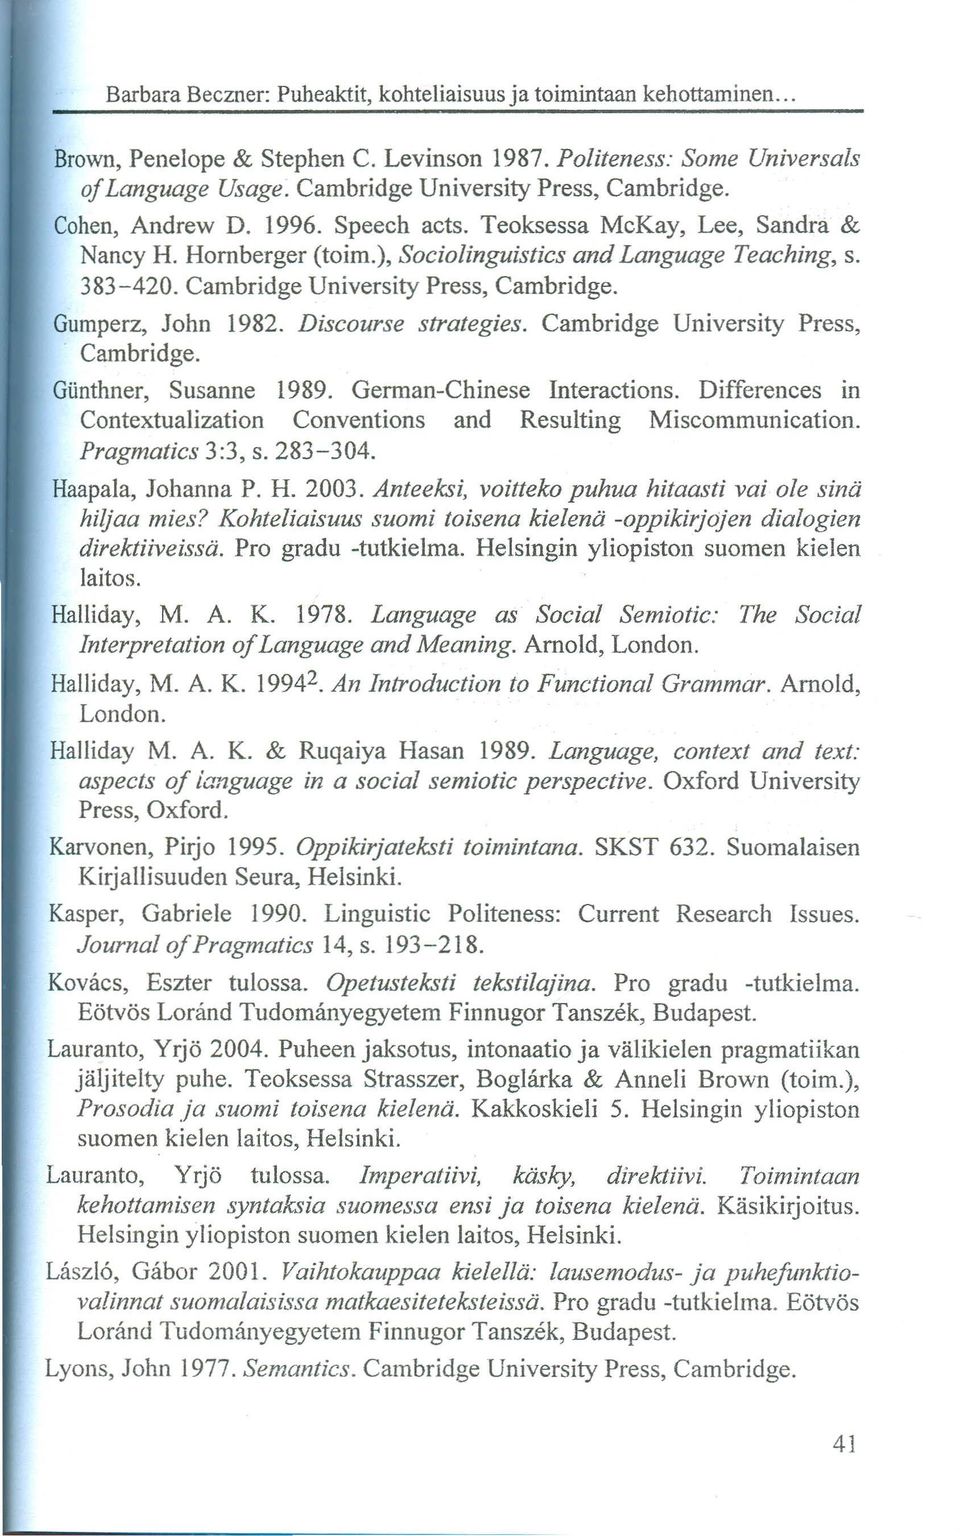 Cambridge University Press, Cambridge. Gumperz, John 1982. Discourse strategies. Cambridge University Press, Cambridge. Günthner, Susanne 1989. German-Chinese Interactions.